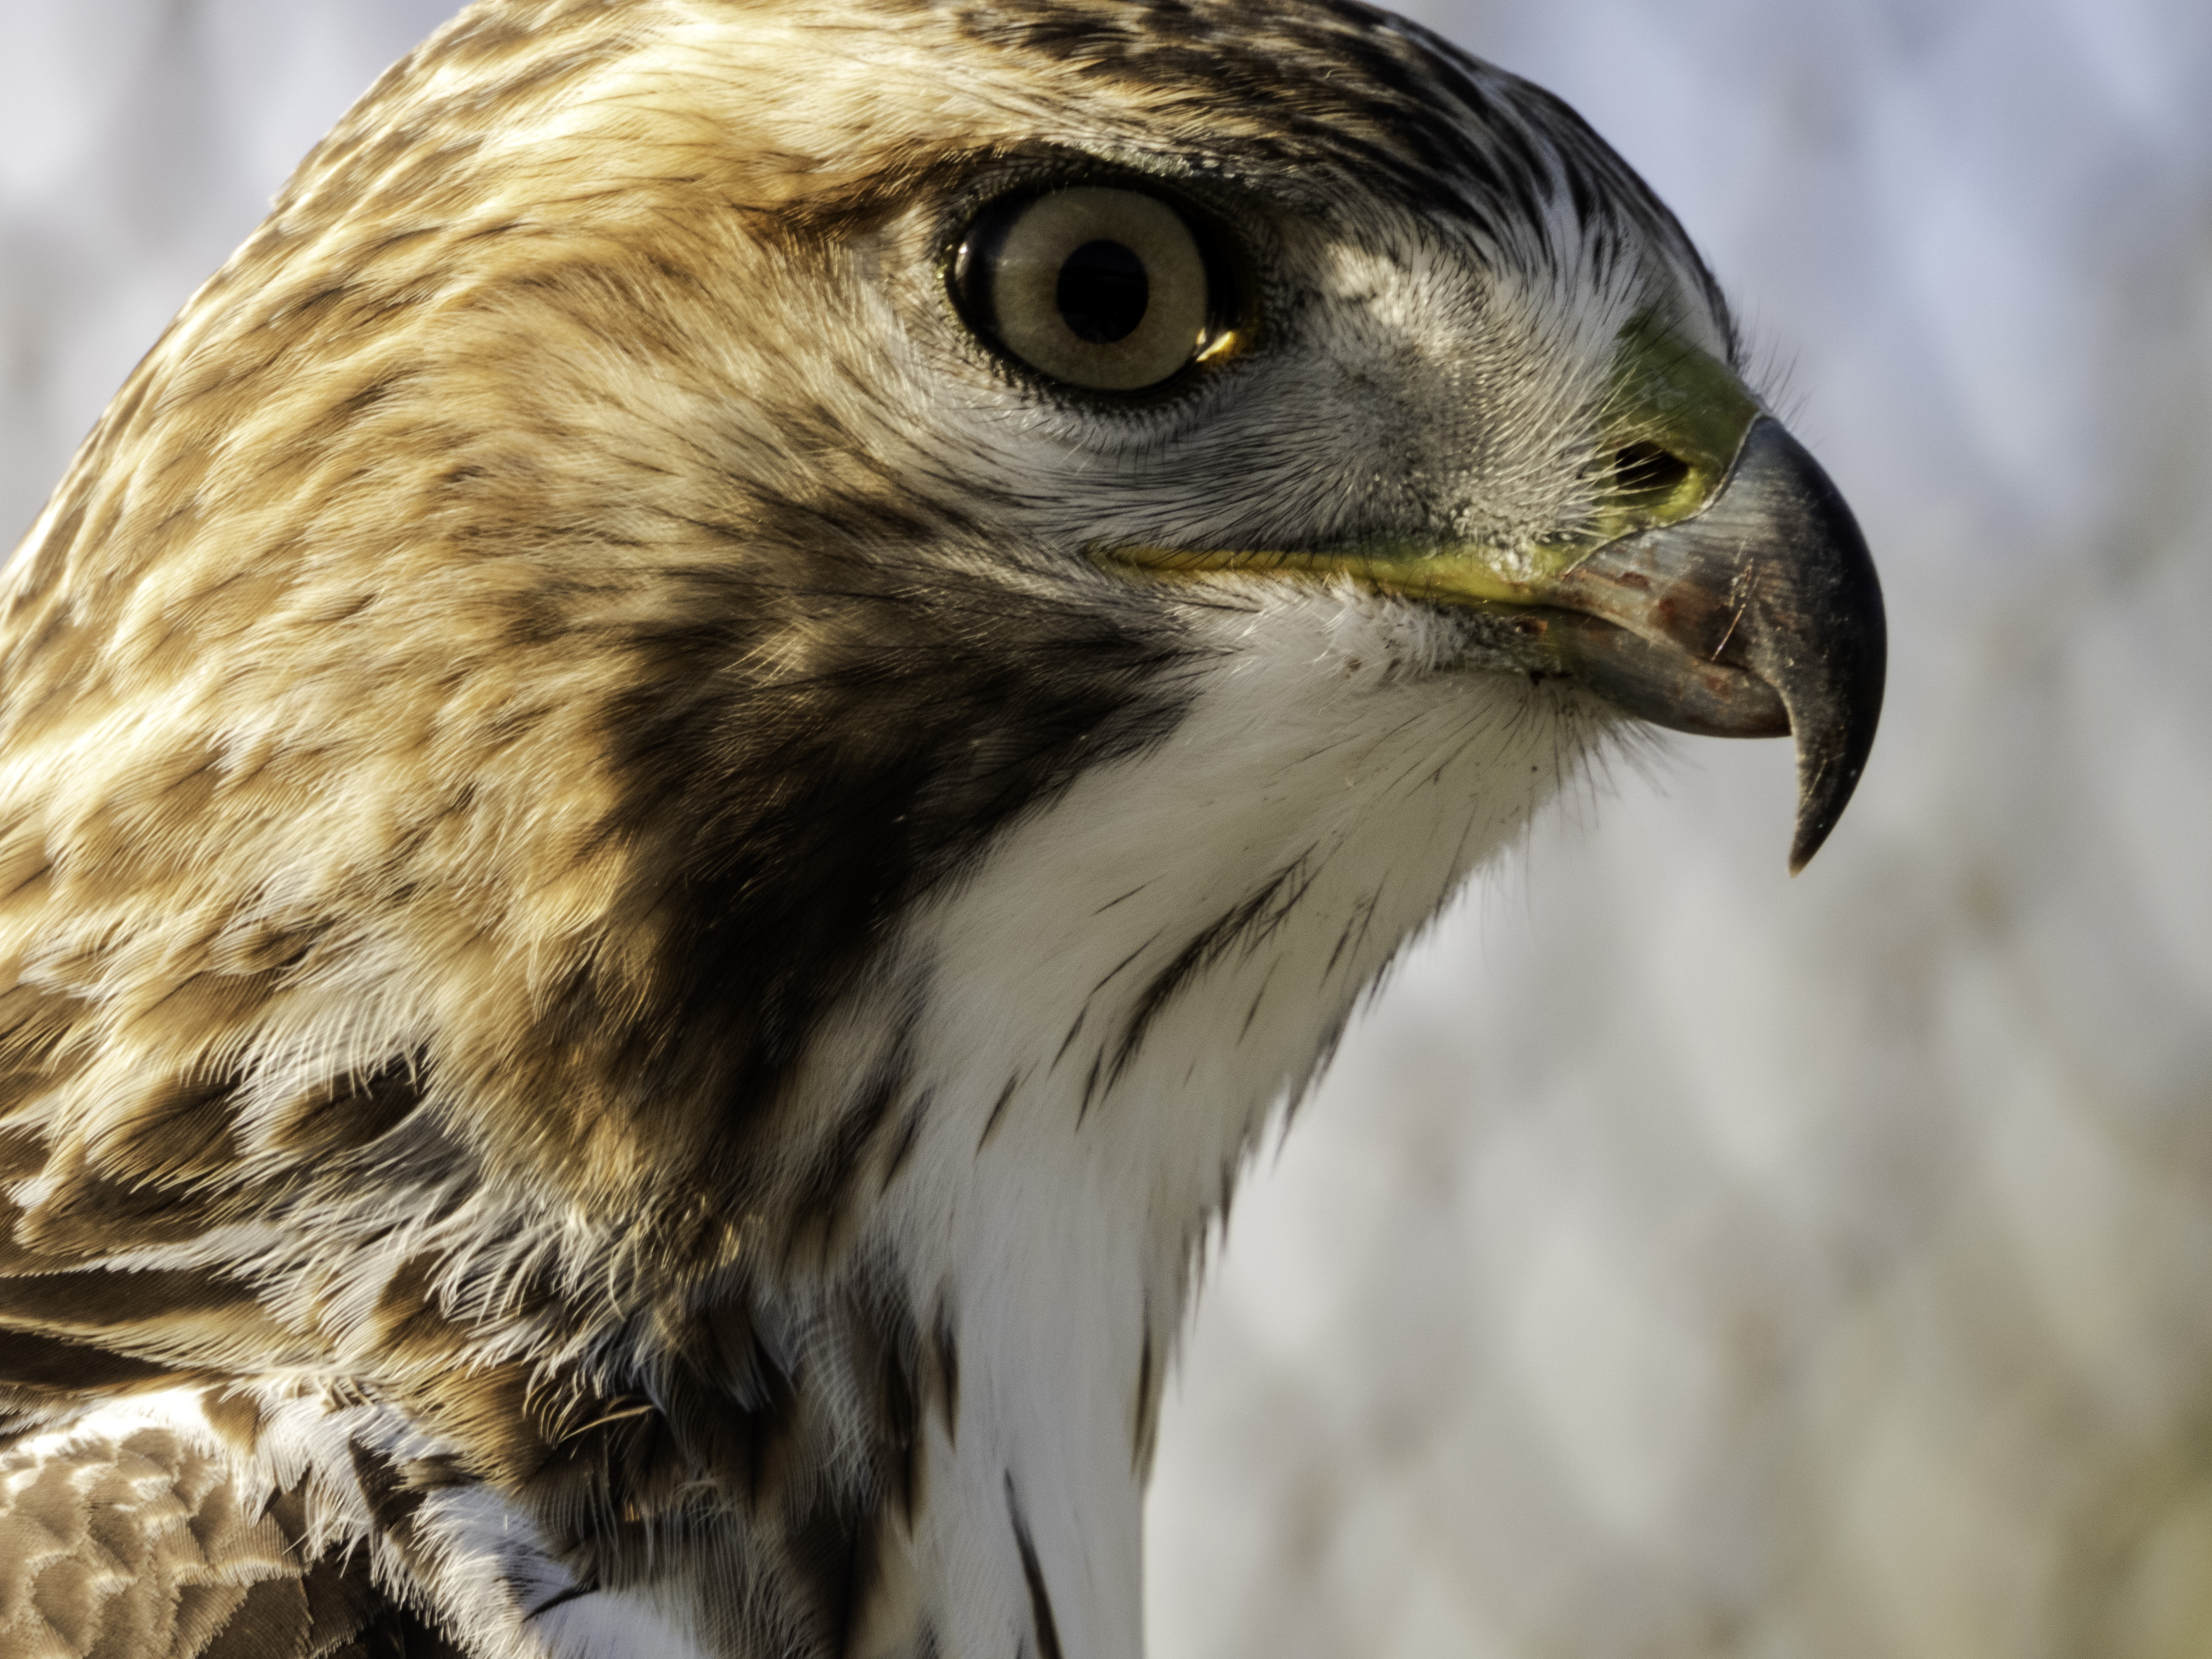 Red Tailed Hawk Headshot Close Up Image Domain Photo